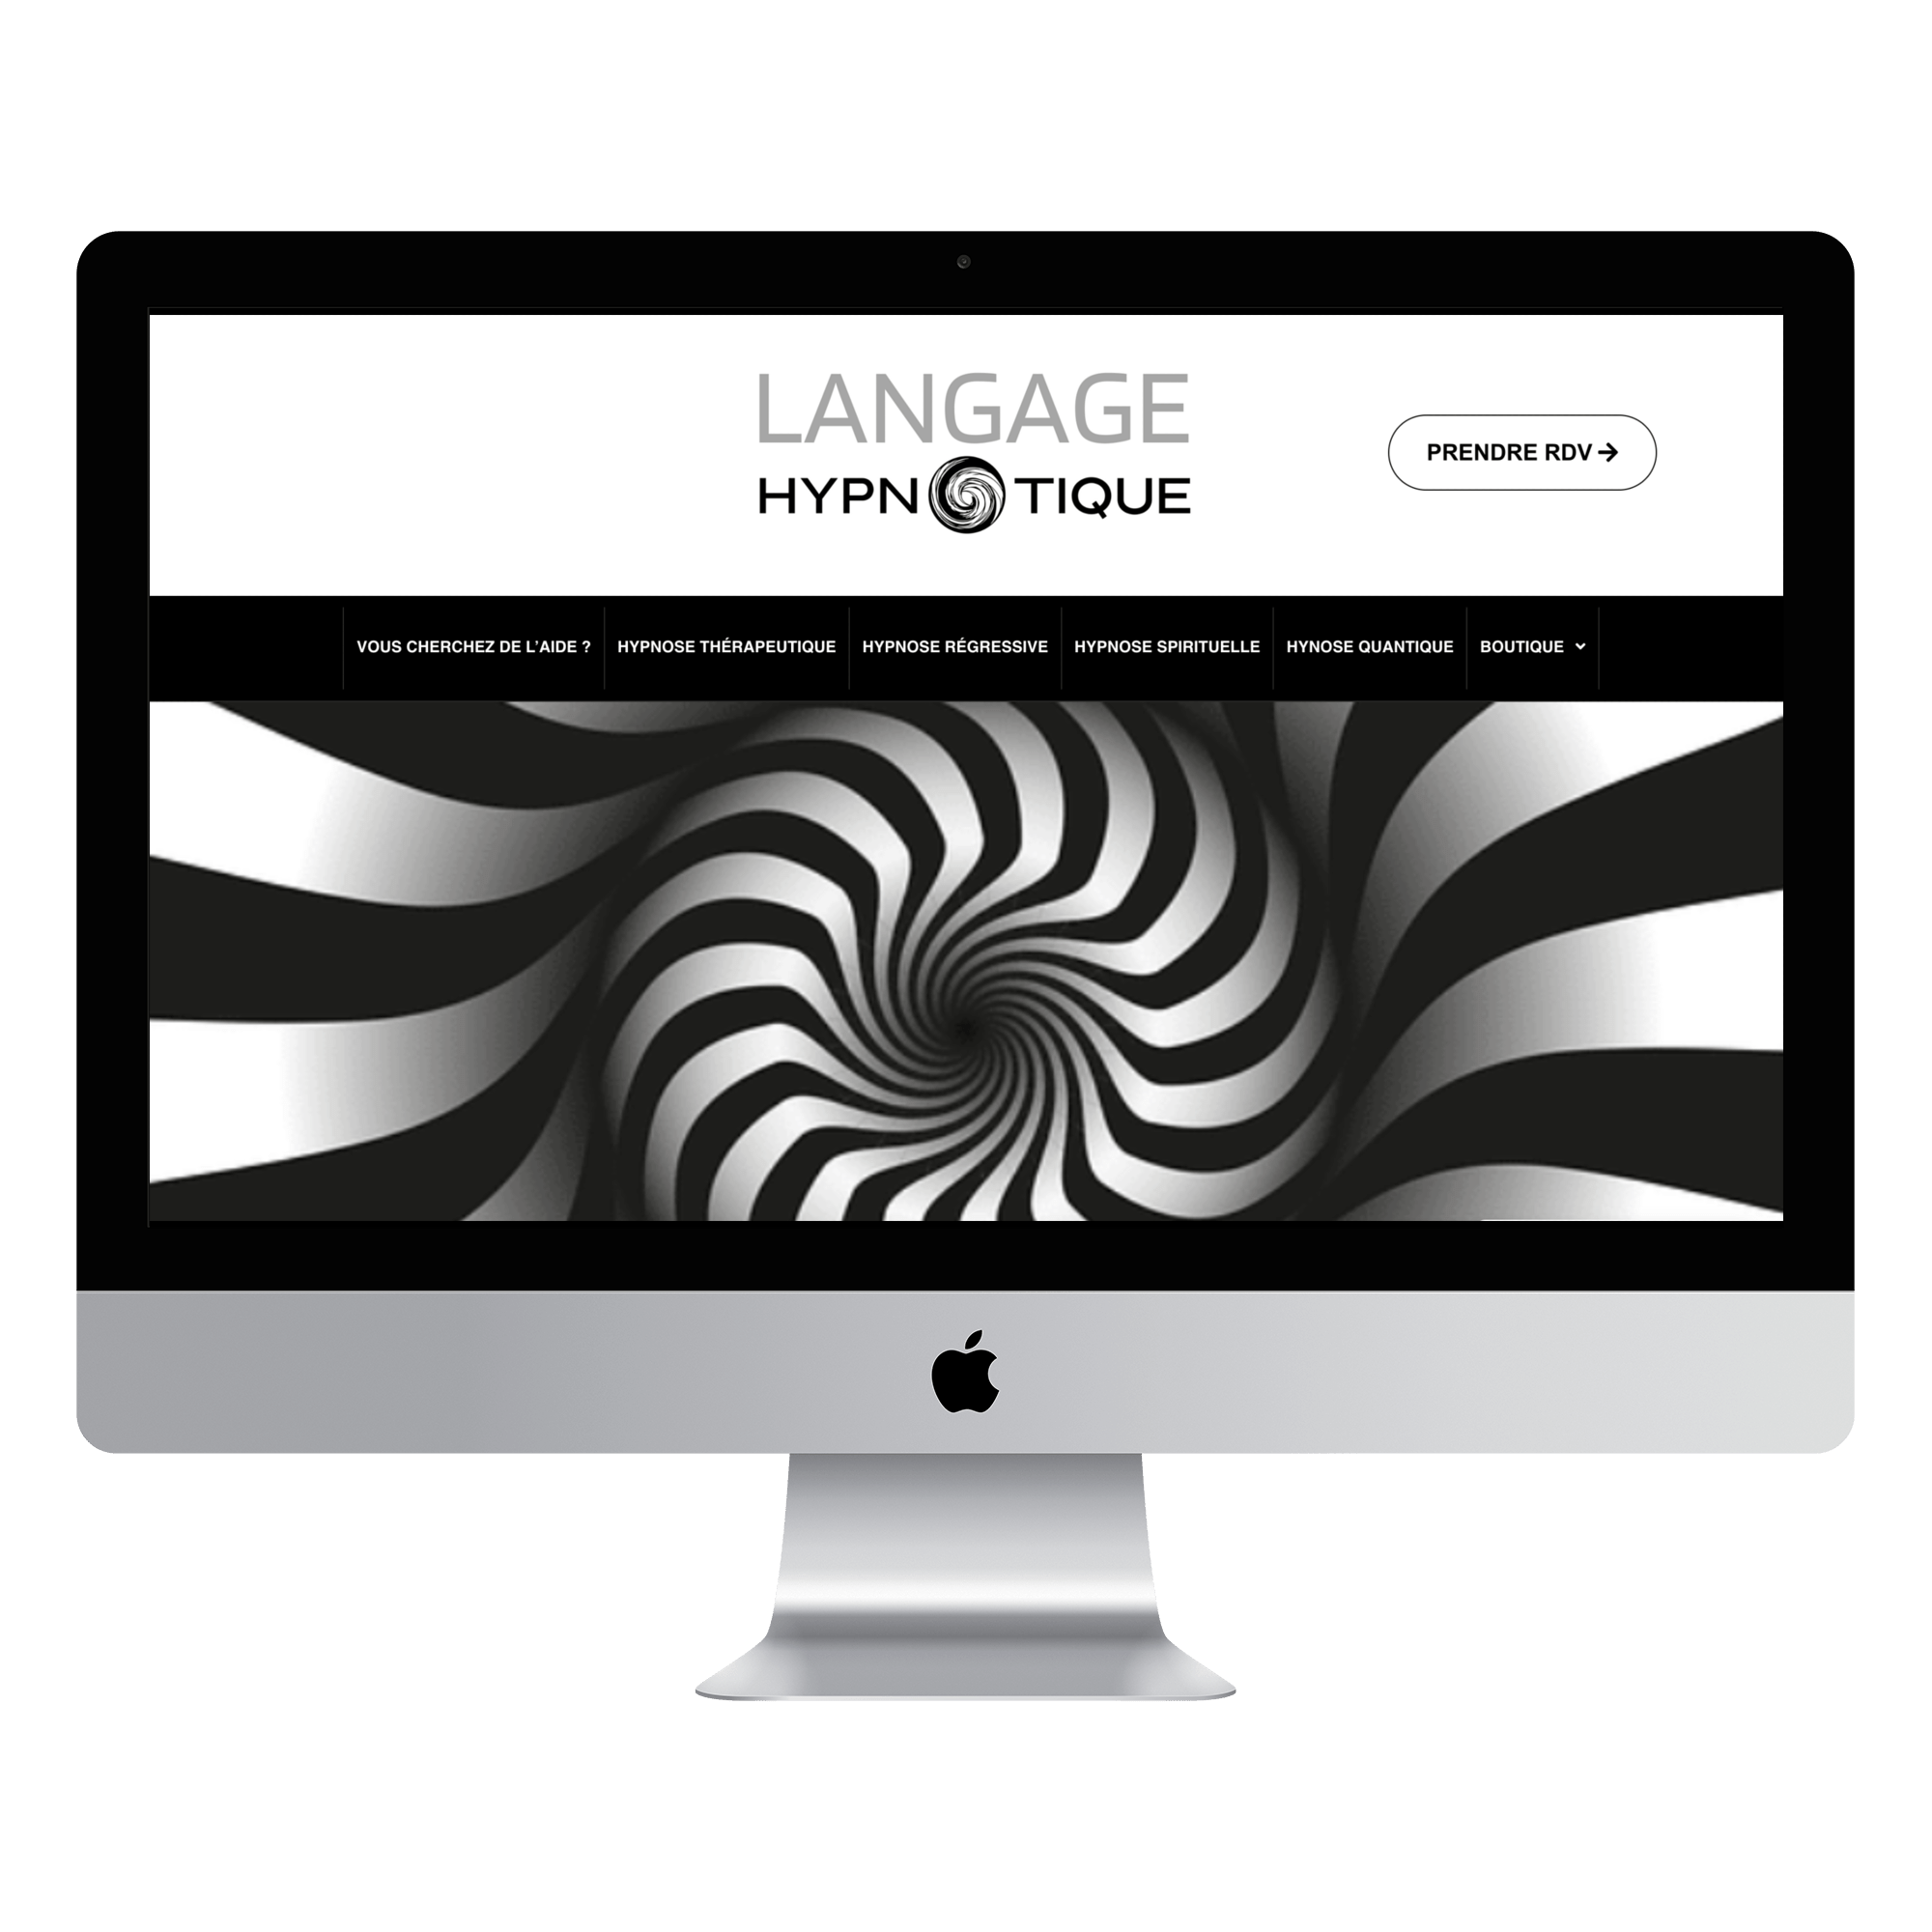 Language Hypnotique